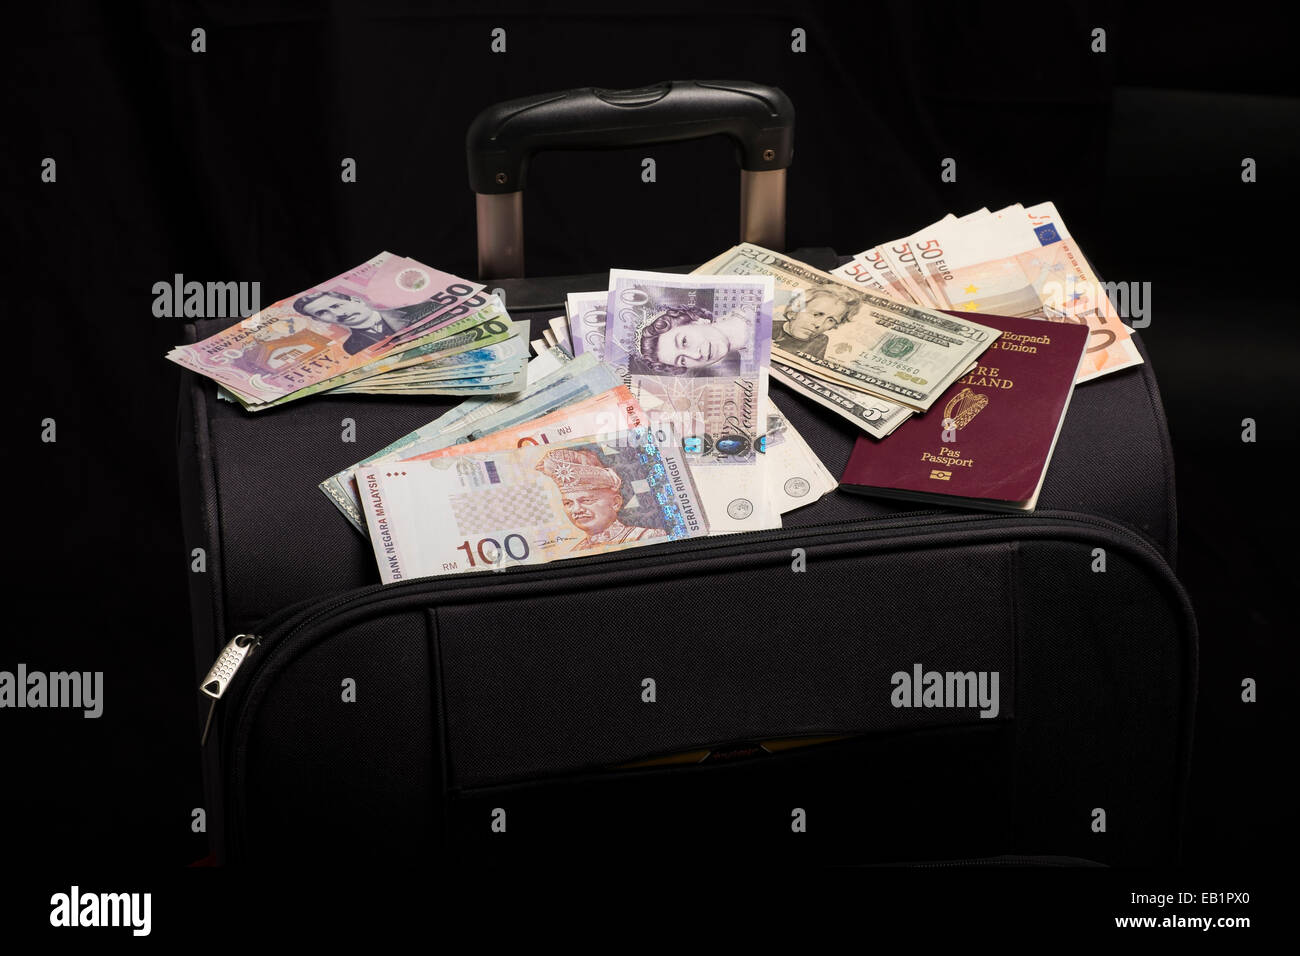 Moneta note, dollaro US, dollaro neozelandese, Ringitts Malesi, sterline inglesi, euro e passaporto irlandese su una valigia Foto Stock